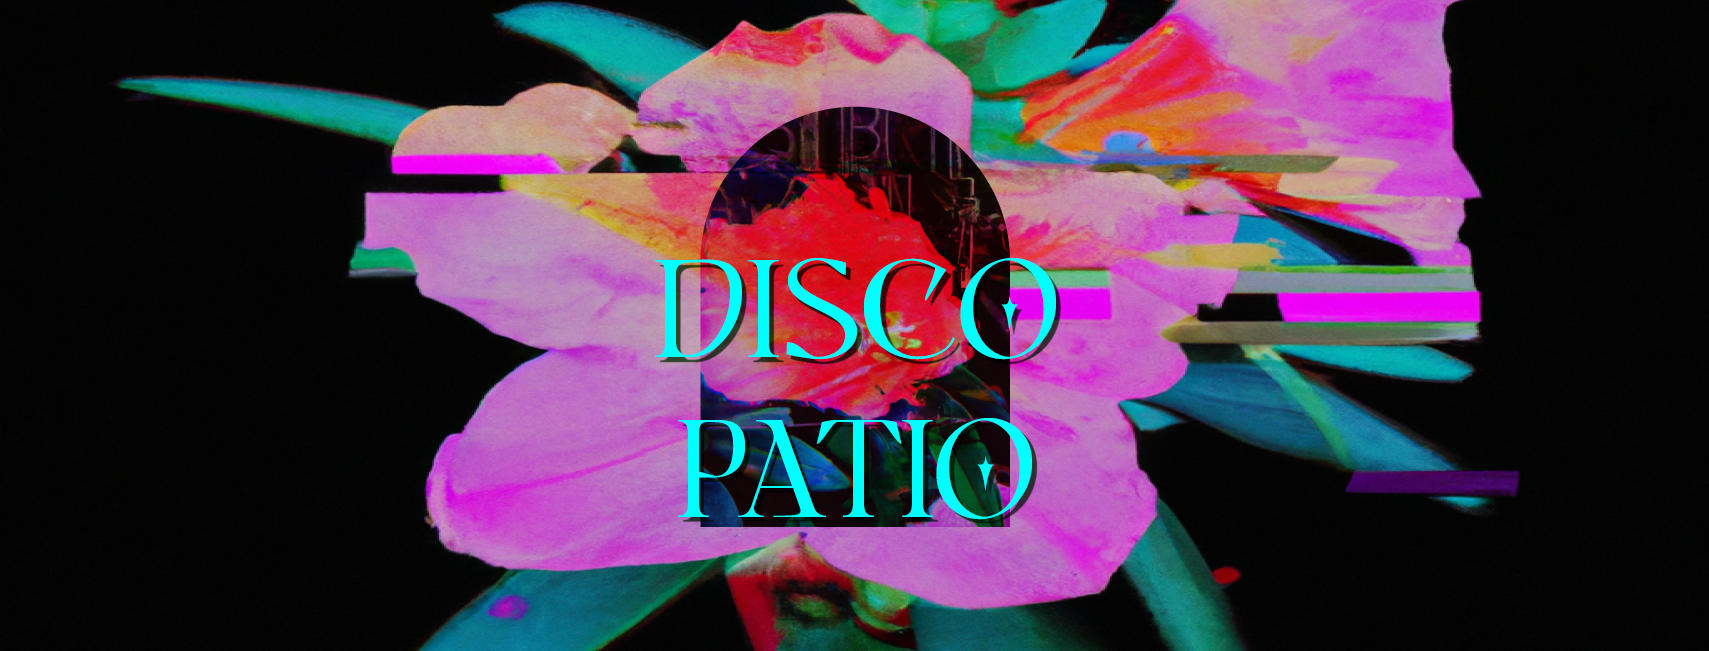 DISCO PATIO V [CANCELED] - フライヤー表